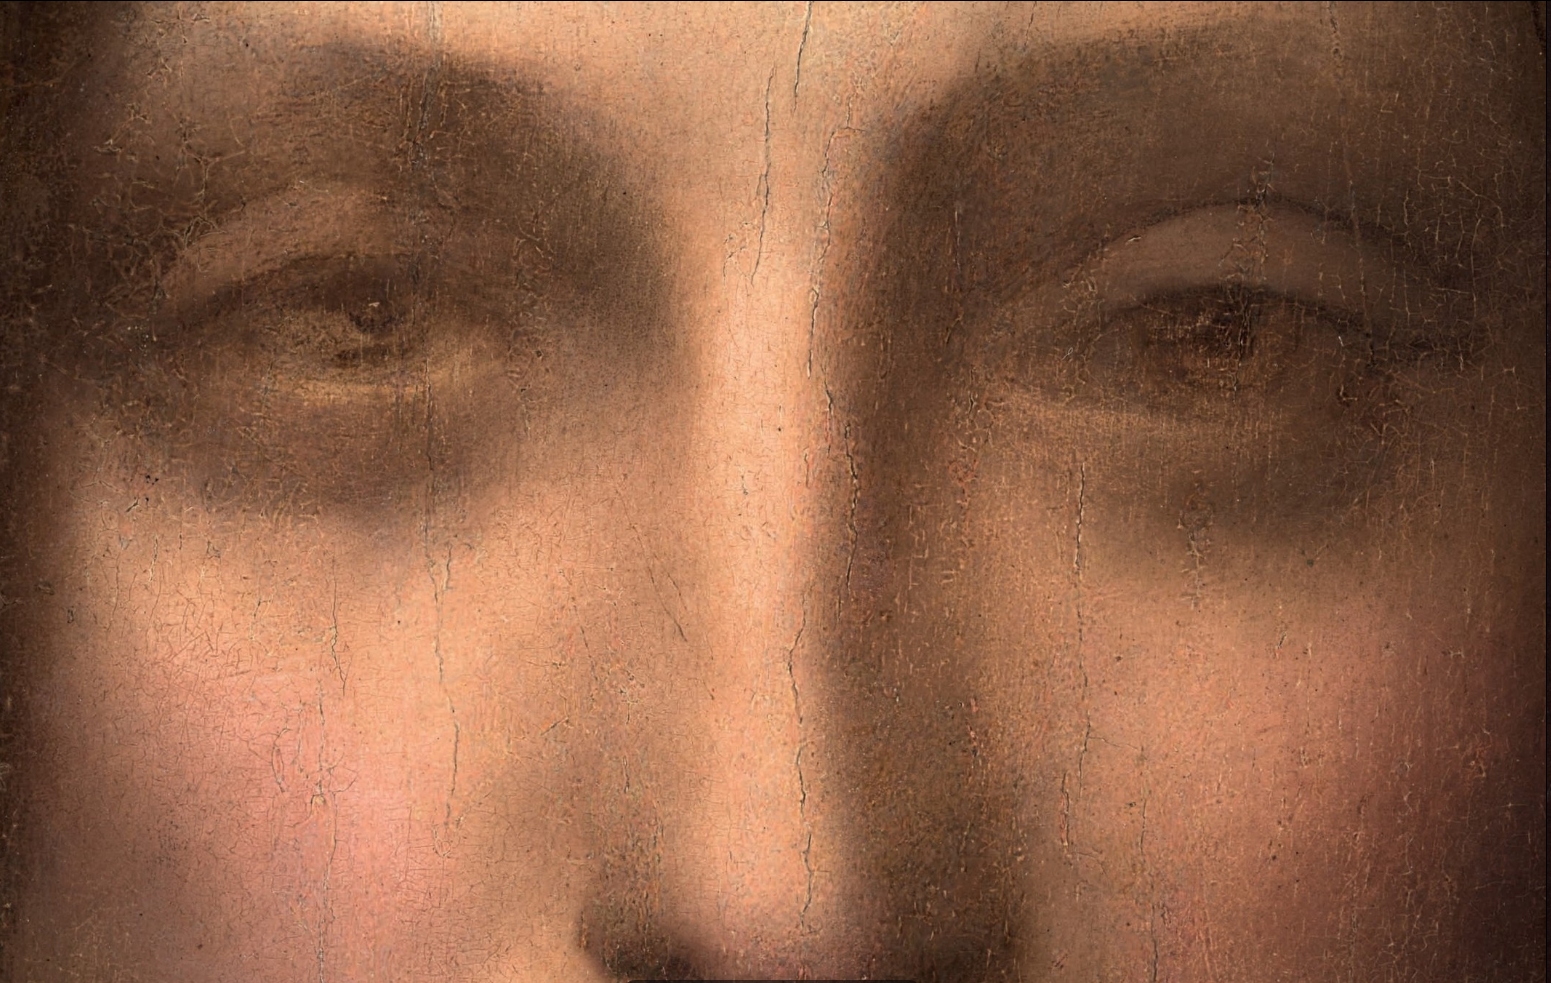 Leonardo+da+Vinci-1452-1519 (858).jpg